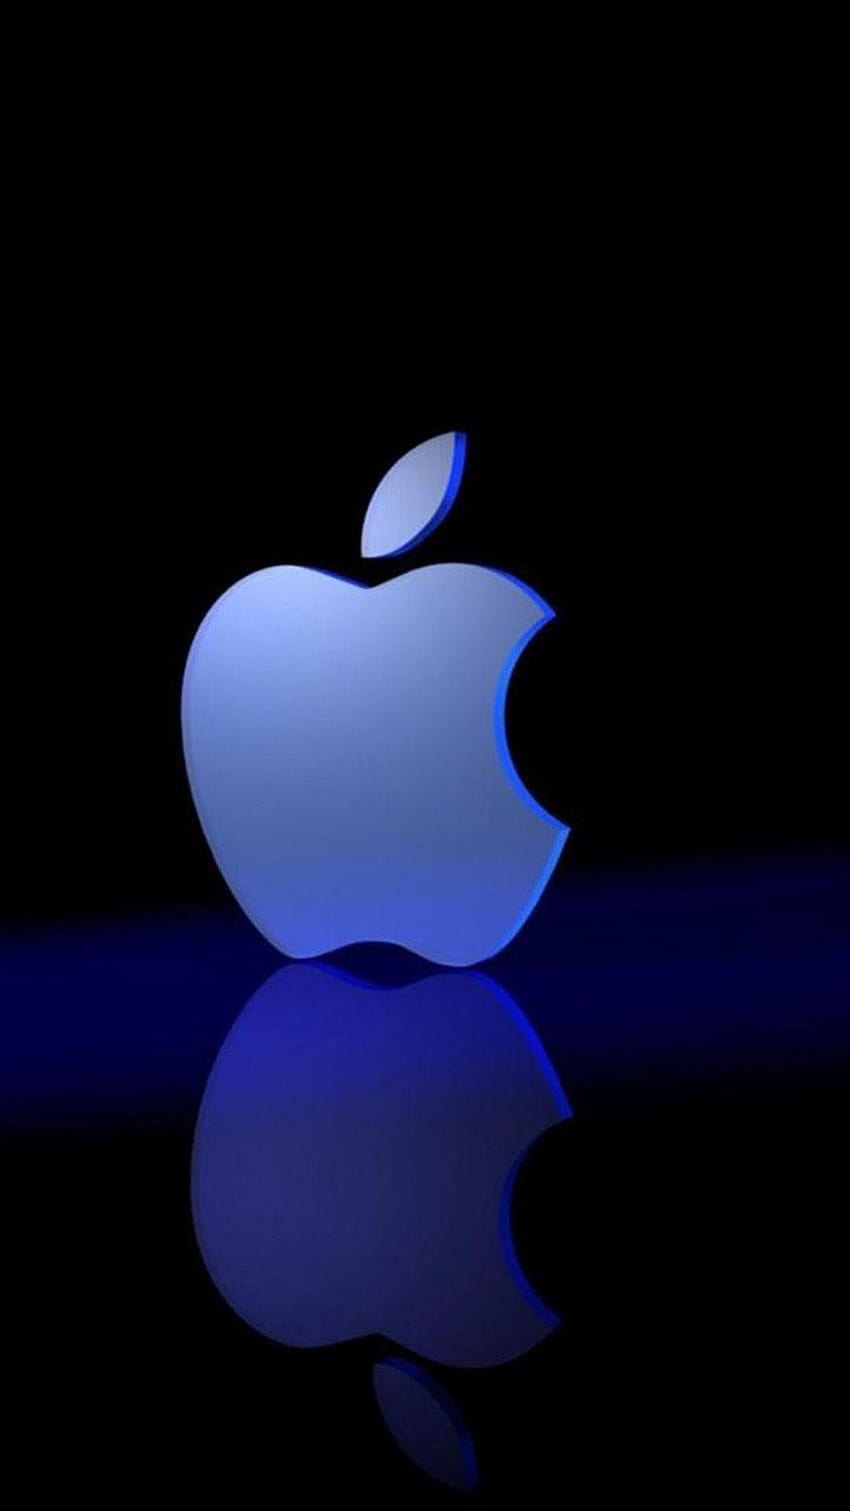 Logotipo de Apple LG G2 28, LG G2, LG, logotipo de Apple iPhone fondo de pantalla del teléfono